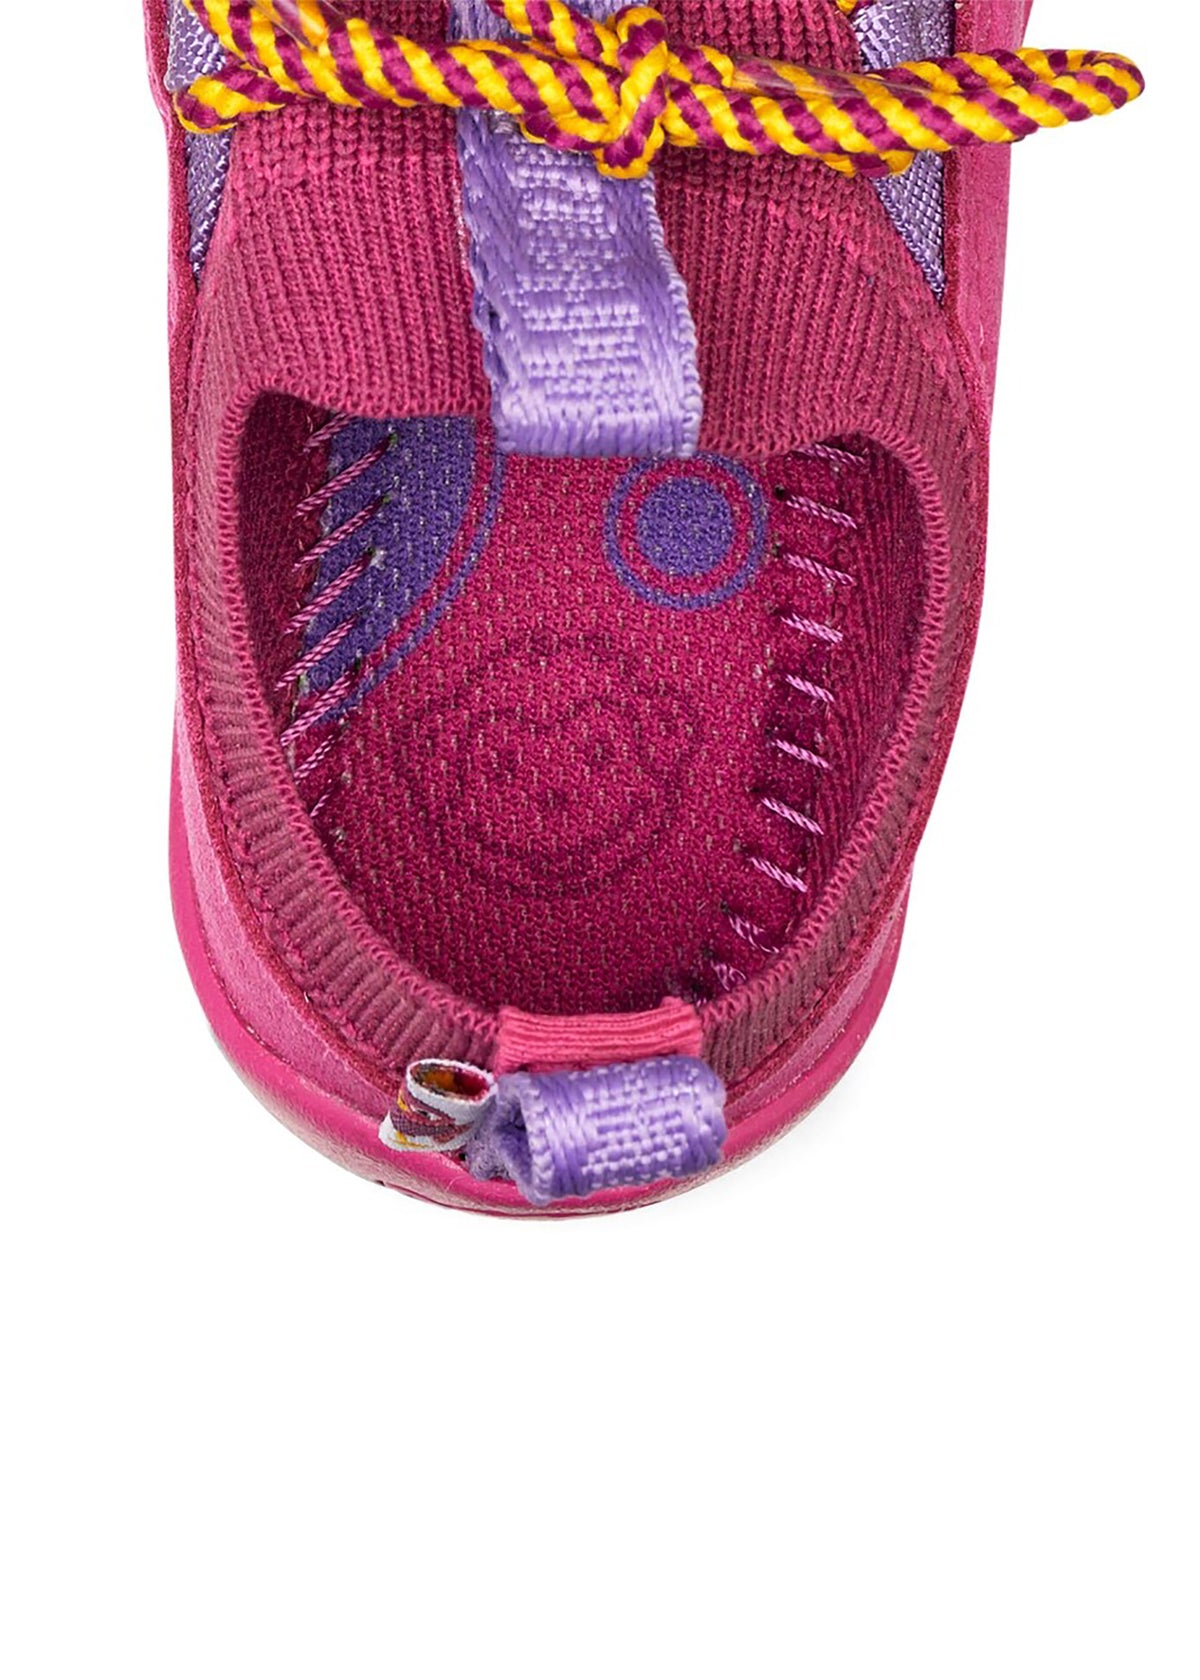 Children's Bird first-step shoes, slippers - Prewalker Knit, pink